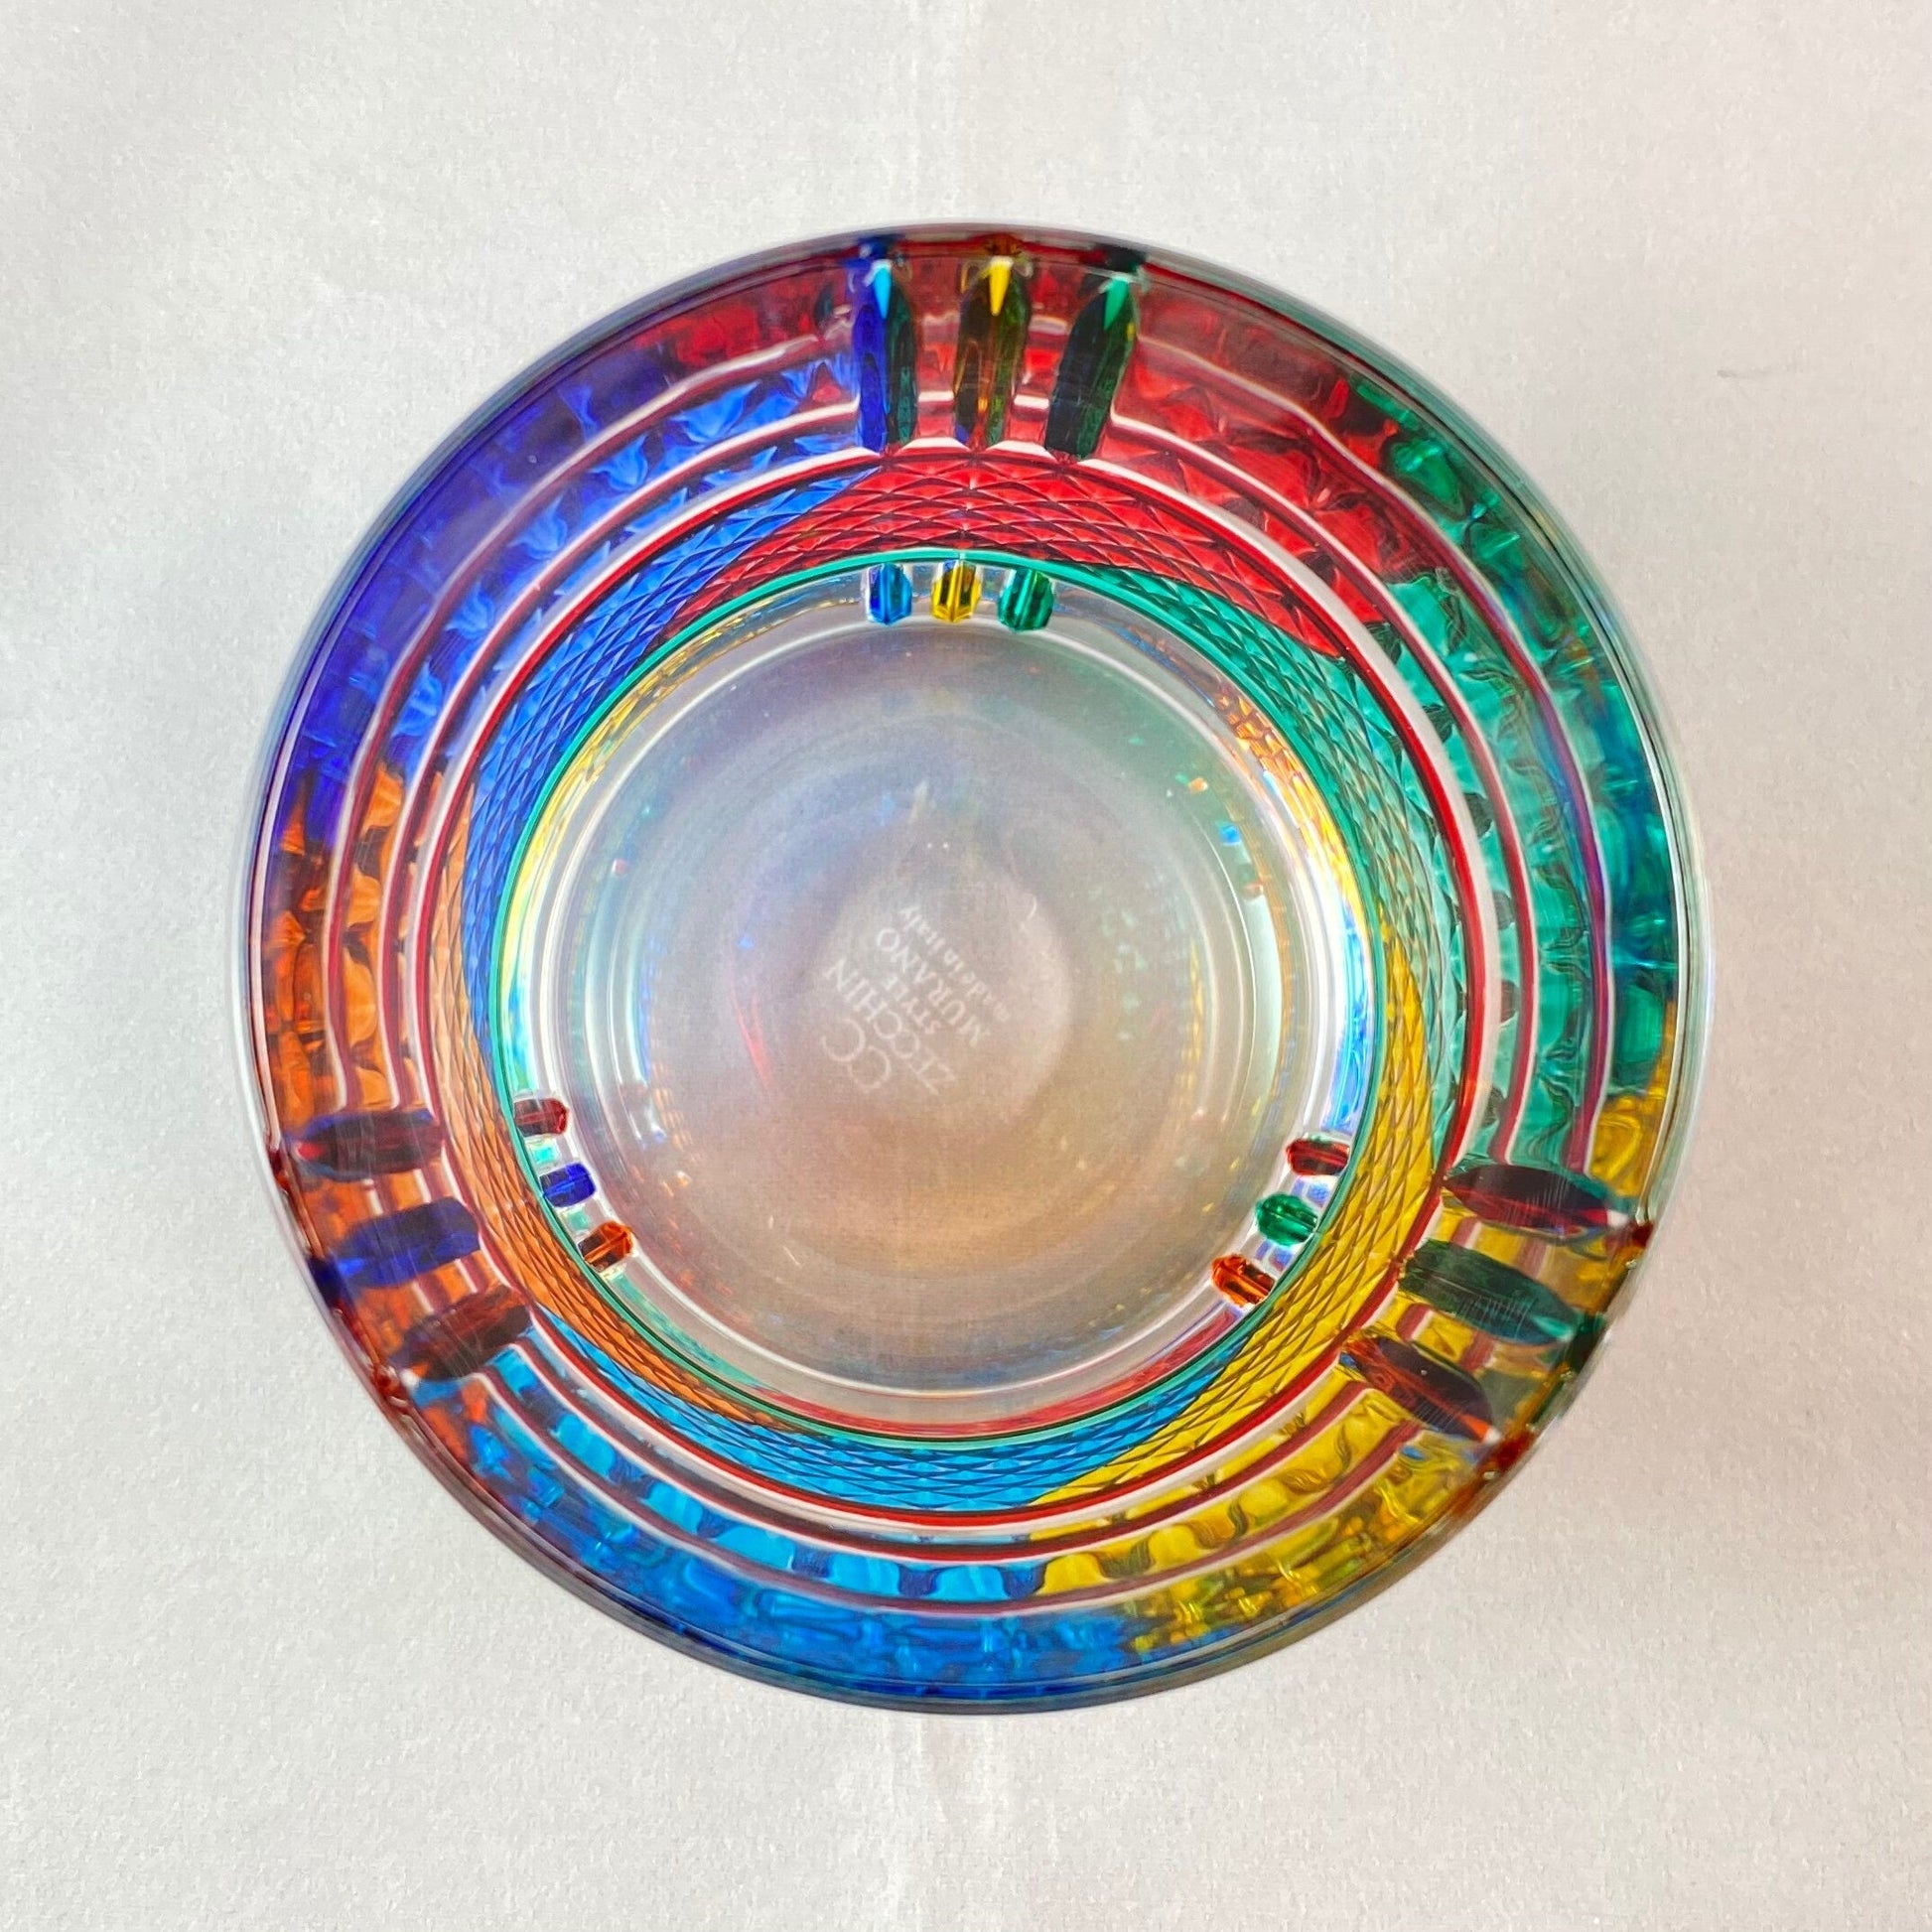 Venetian Glass Tumbler - Handmade in Italy, Colorful Murano Glass